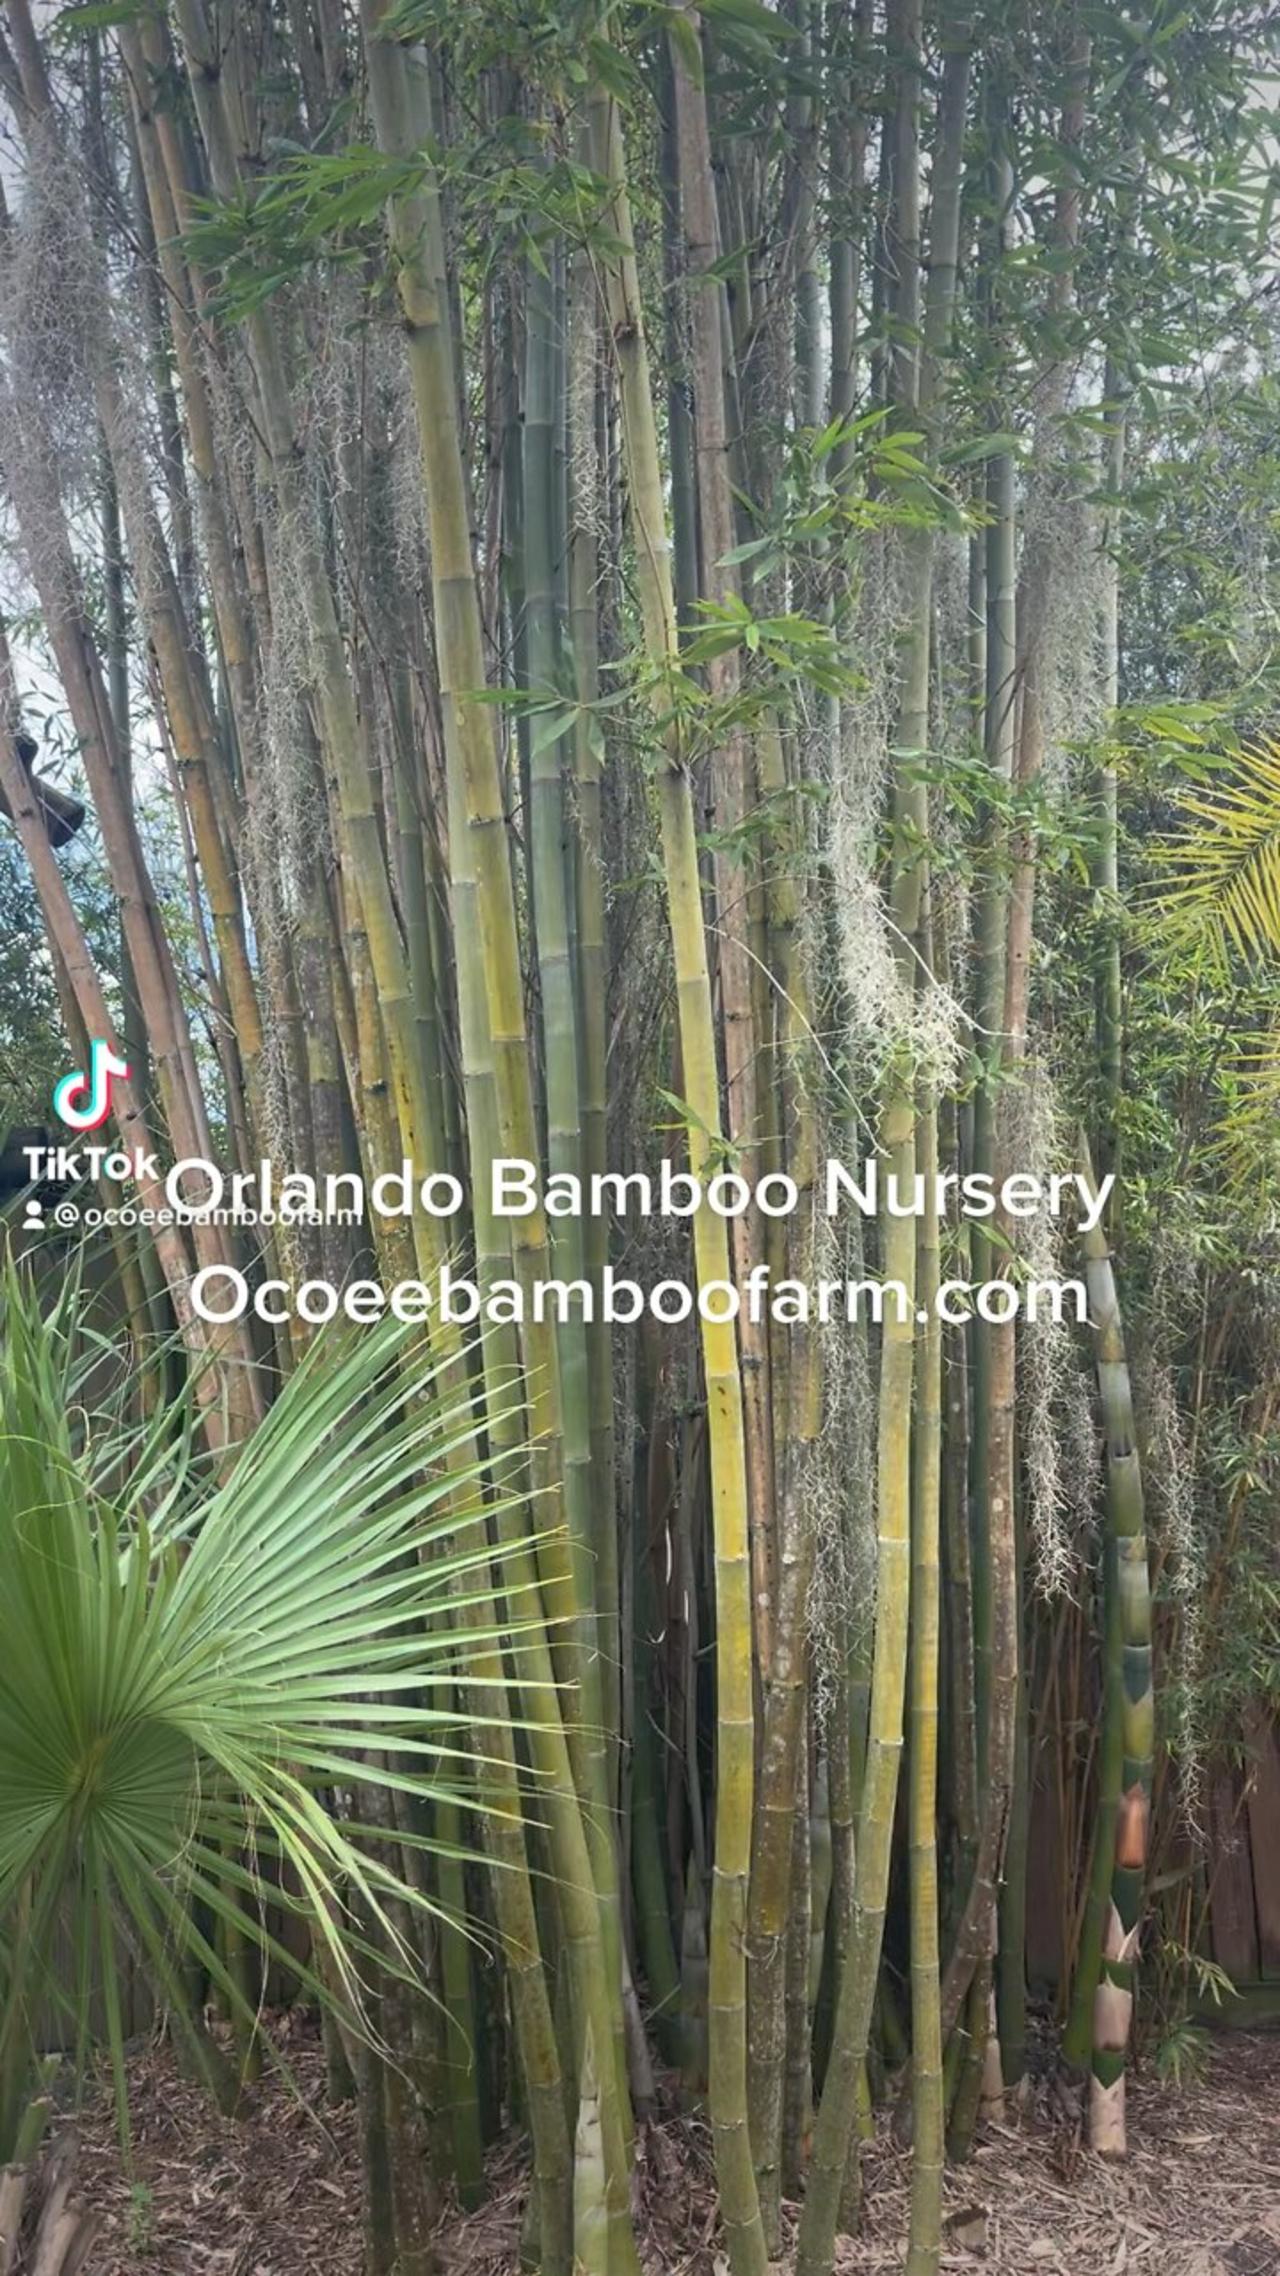 Orlando Bamboo Nursery Ocoee Bamboo Farm 407-777-4807